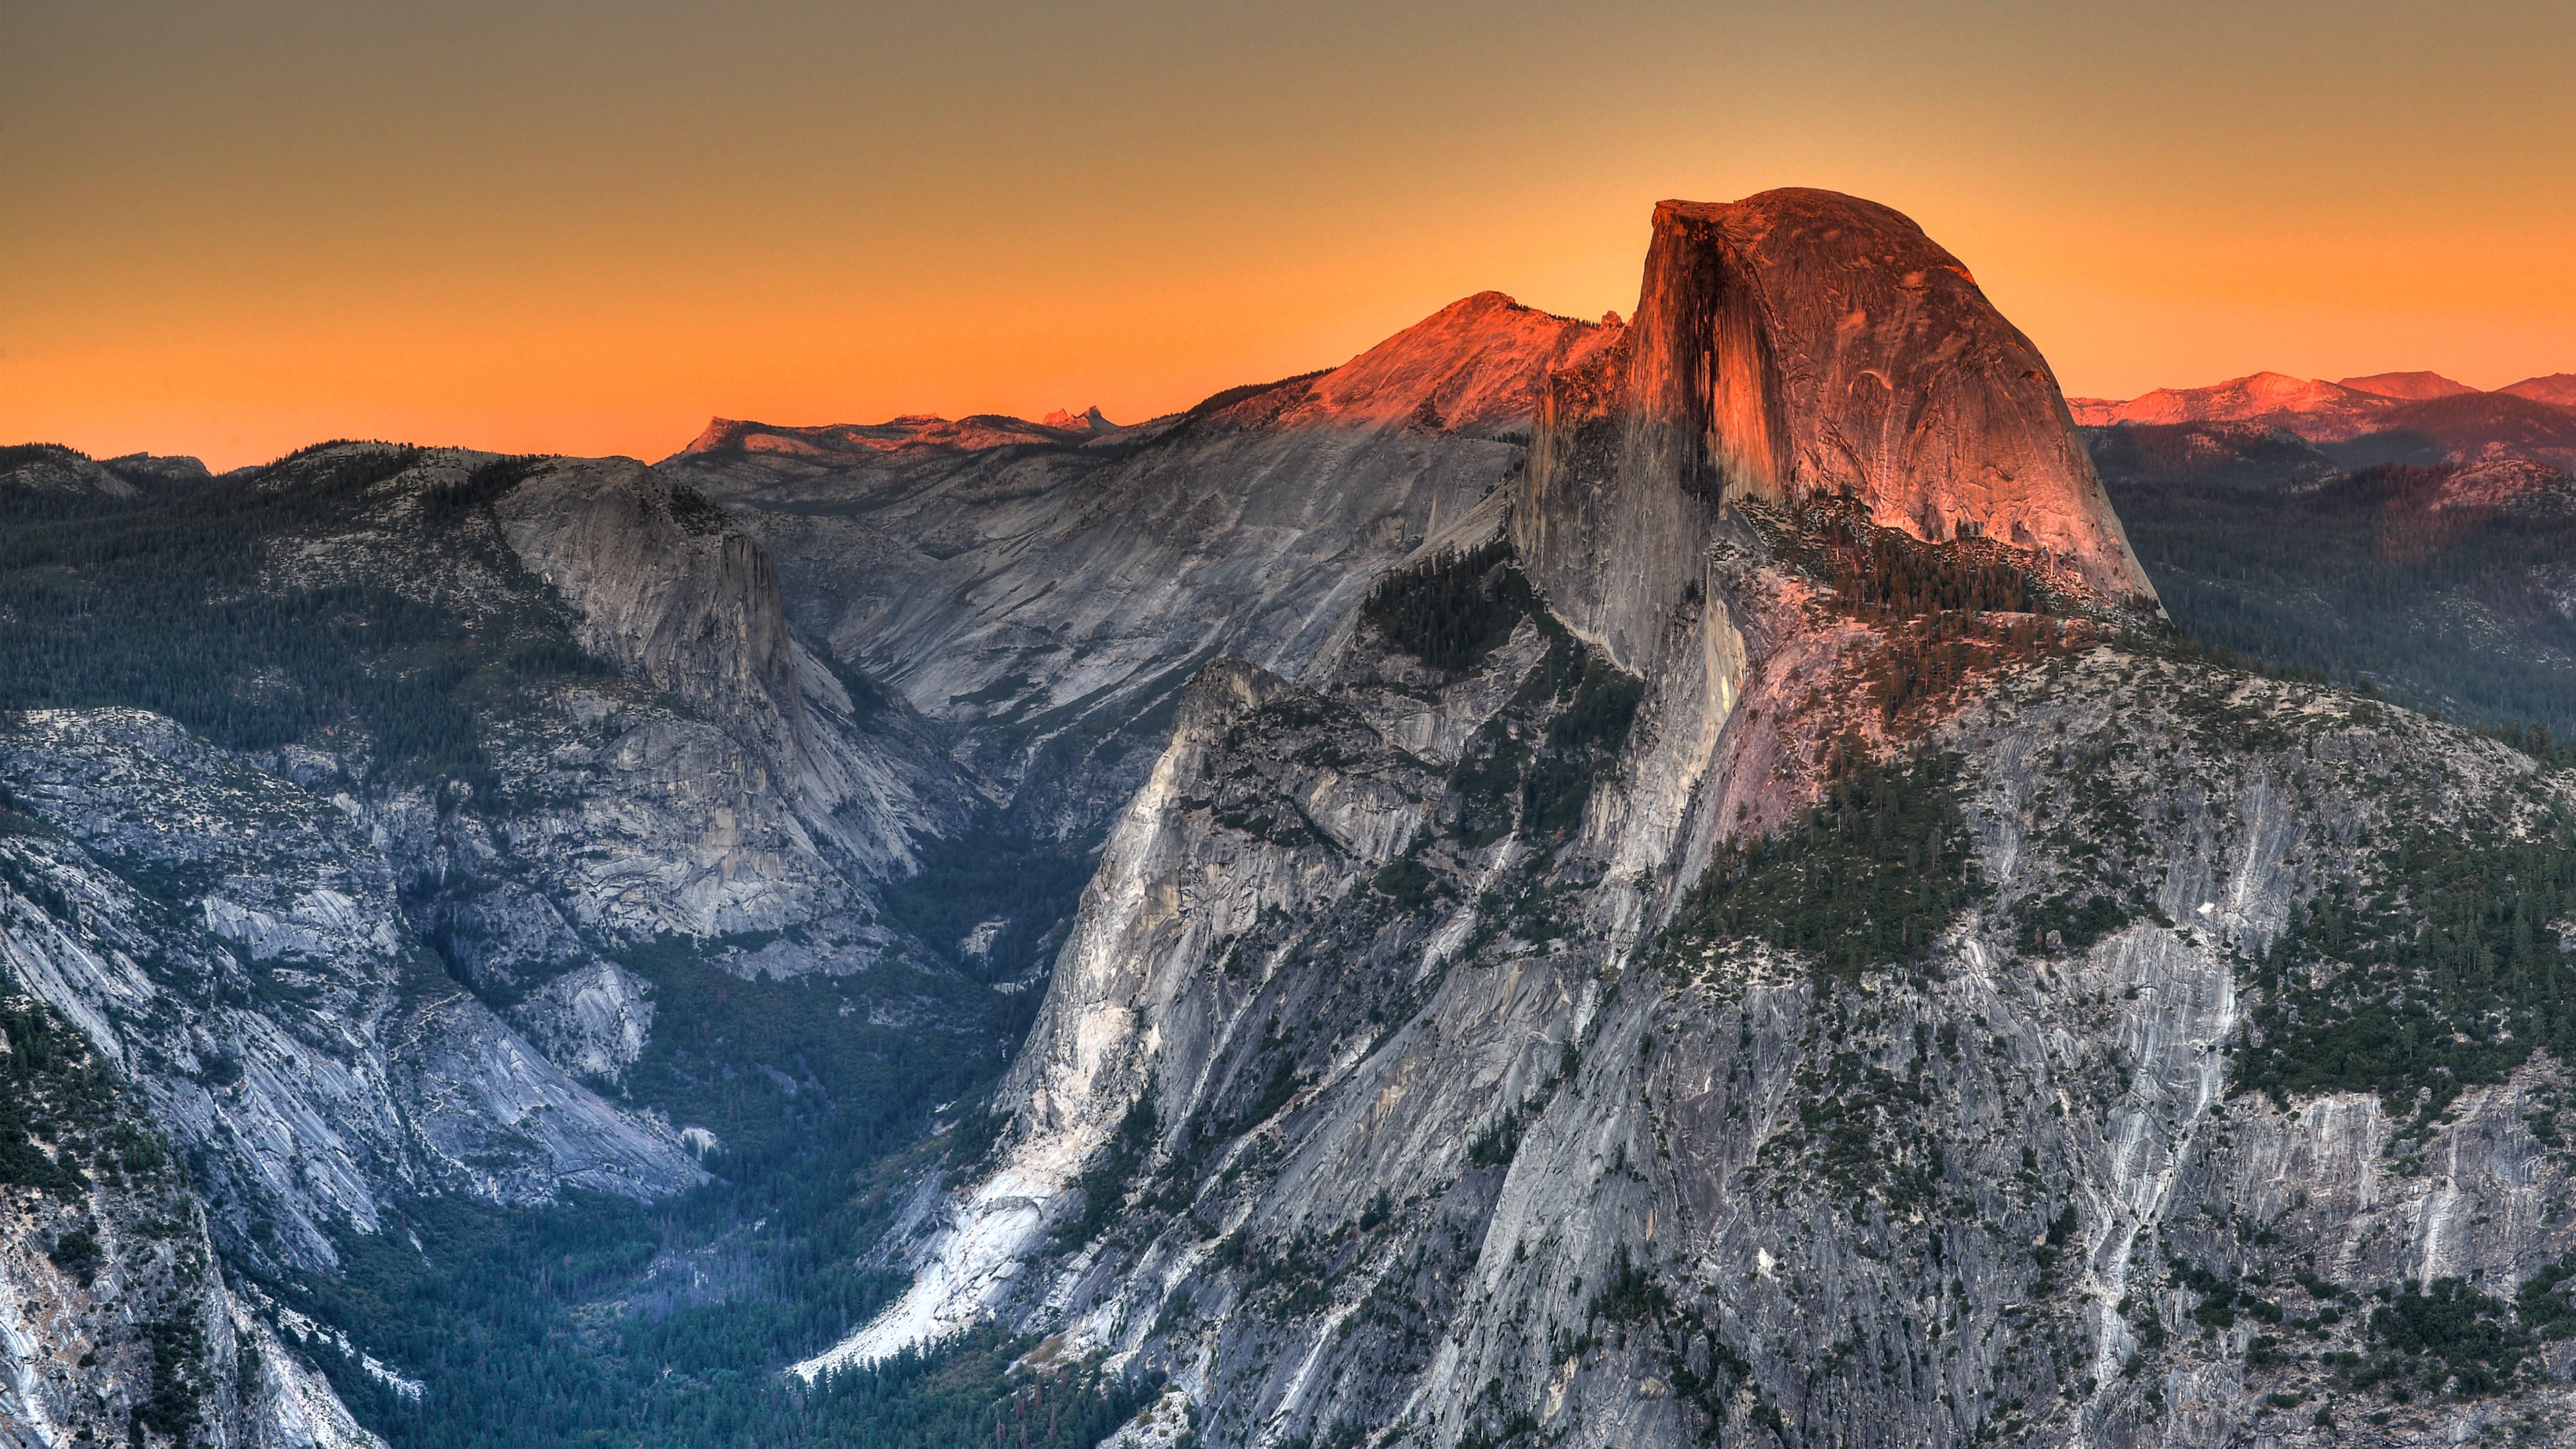 General 3840x2160 Yosemite National Park landscape cliff mountains Sierra Nevada USA rocks rock formation